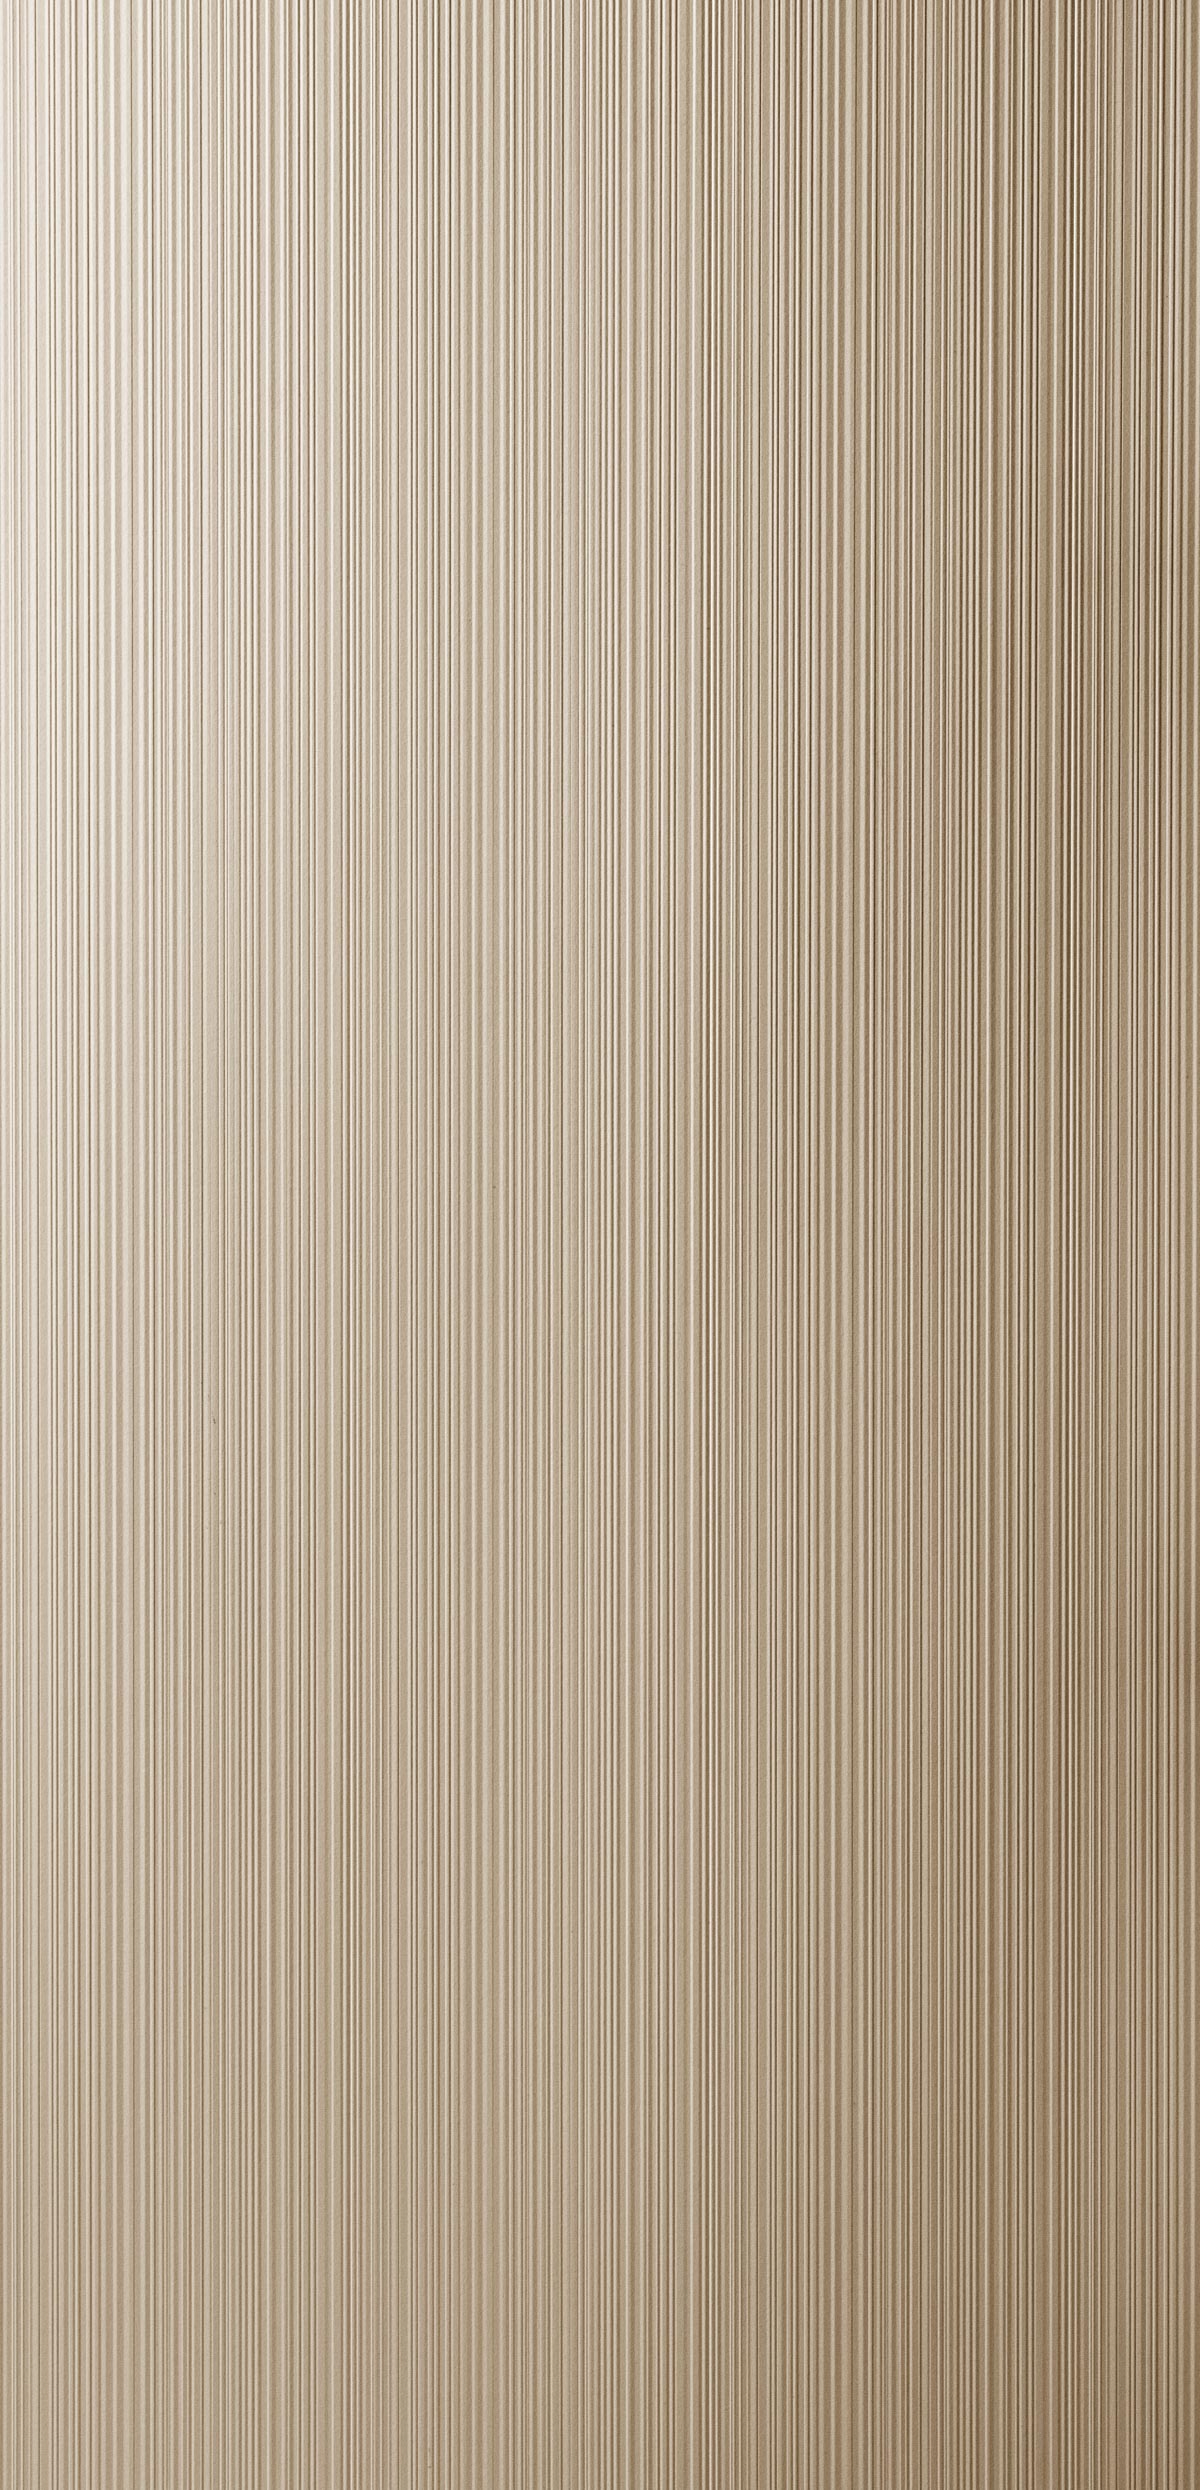 Lines Cream 003-panel